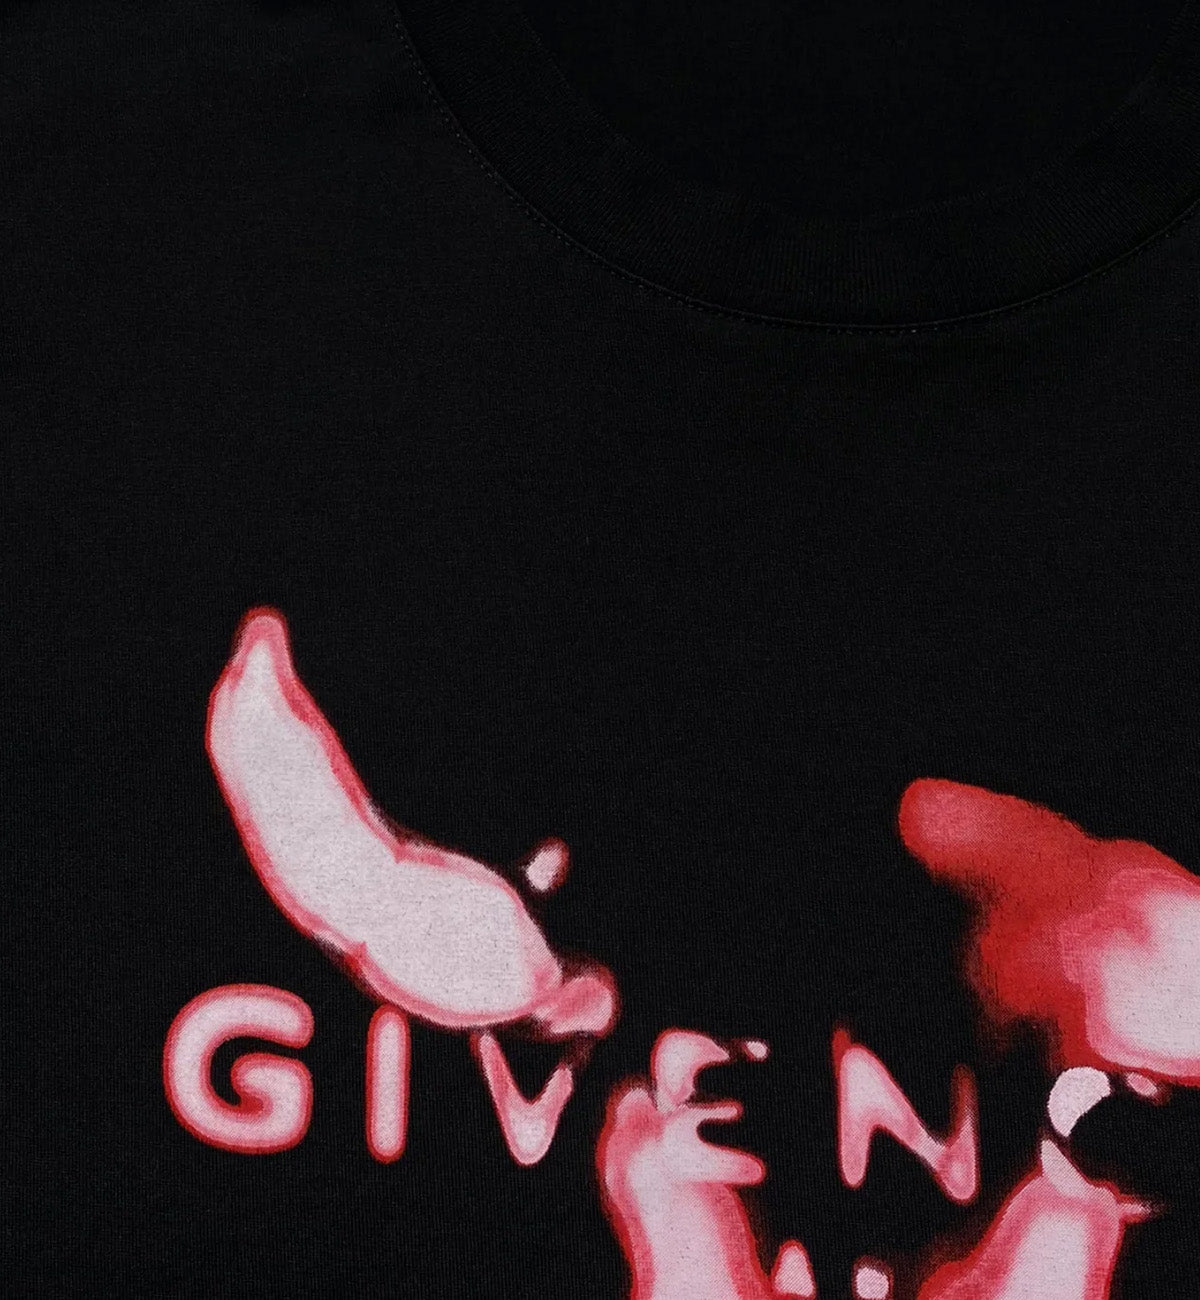 Givenchy Bull Oversized T-Shirt (Black)